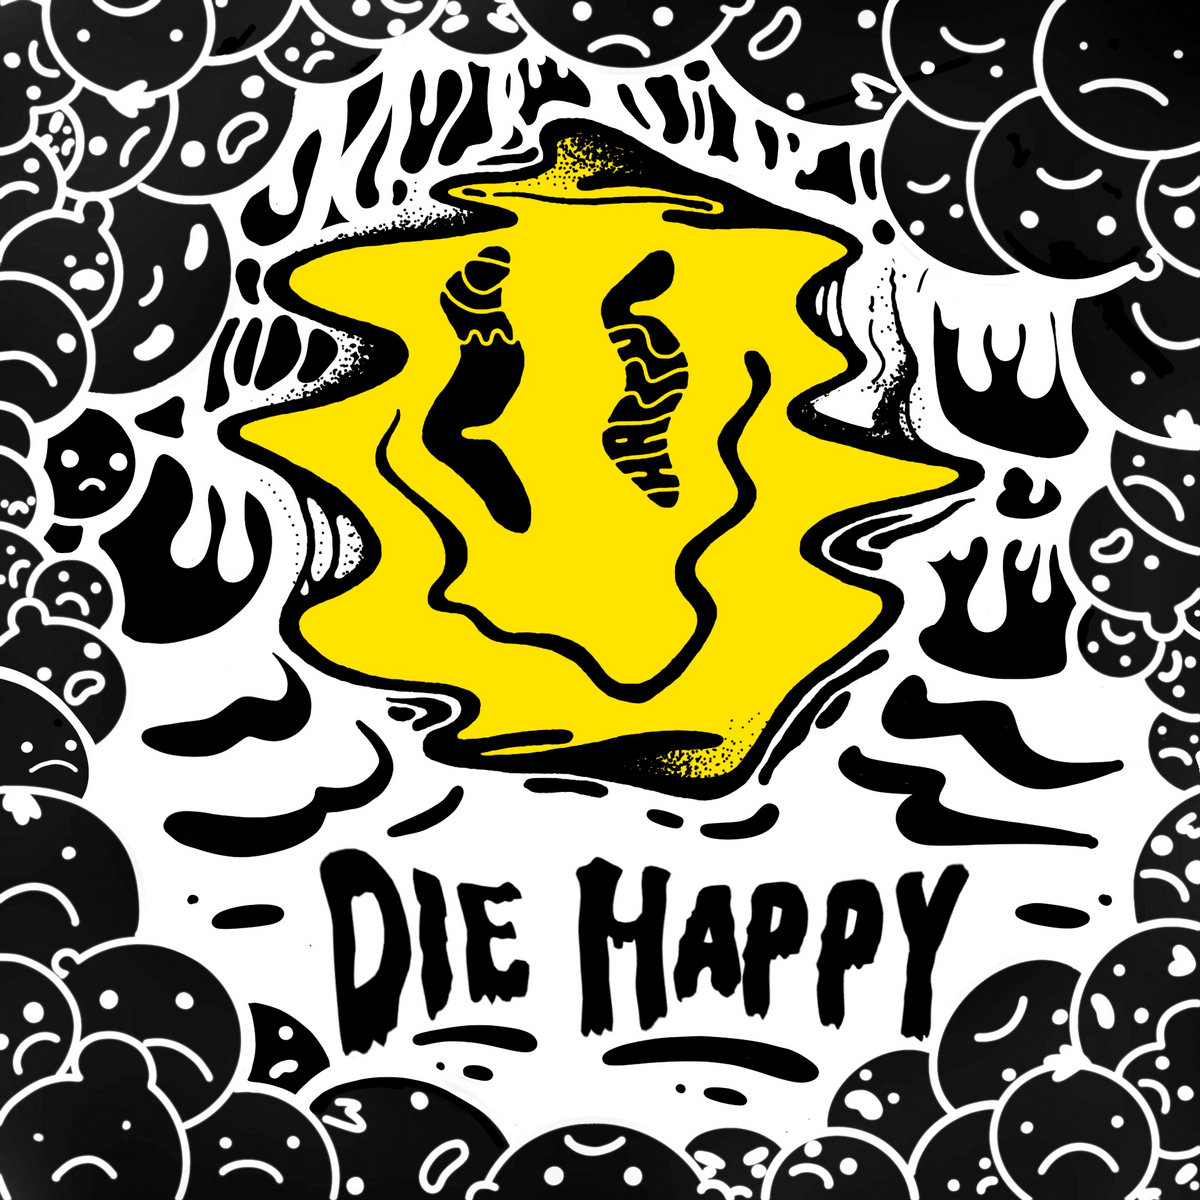 VCTRE - Die Happy